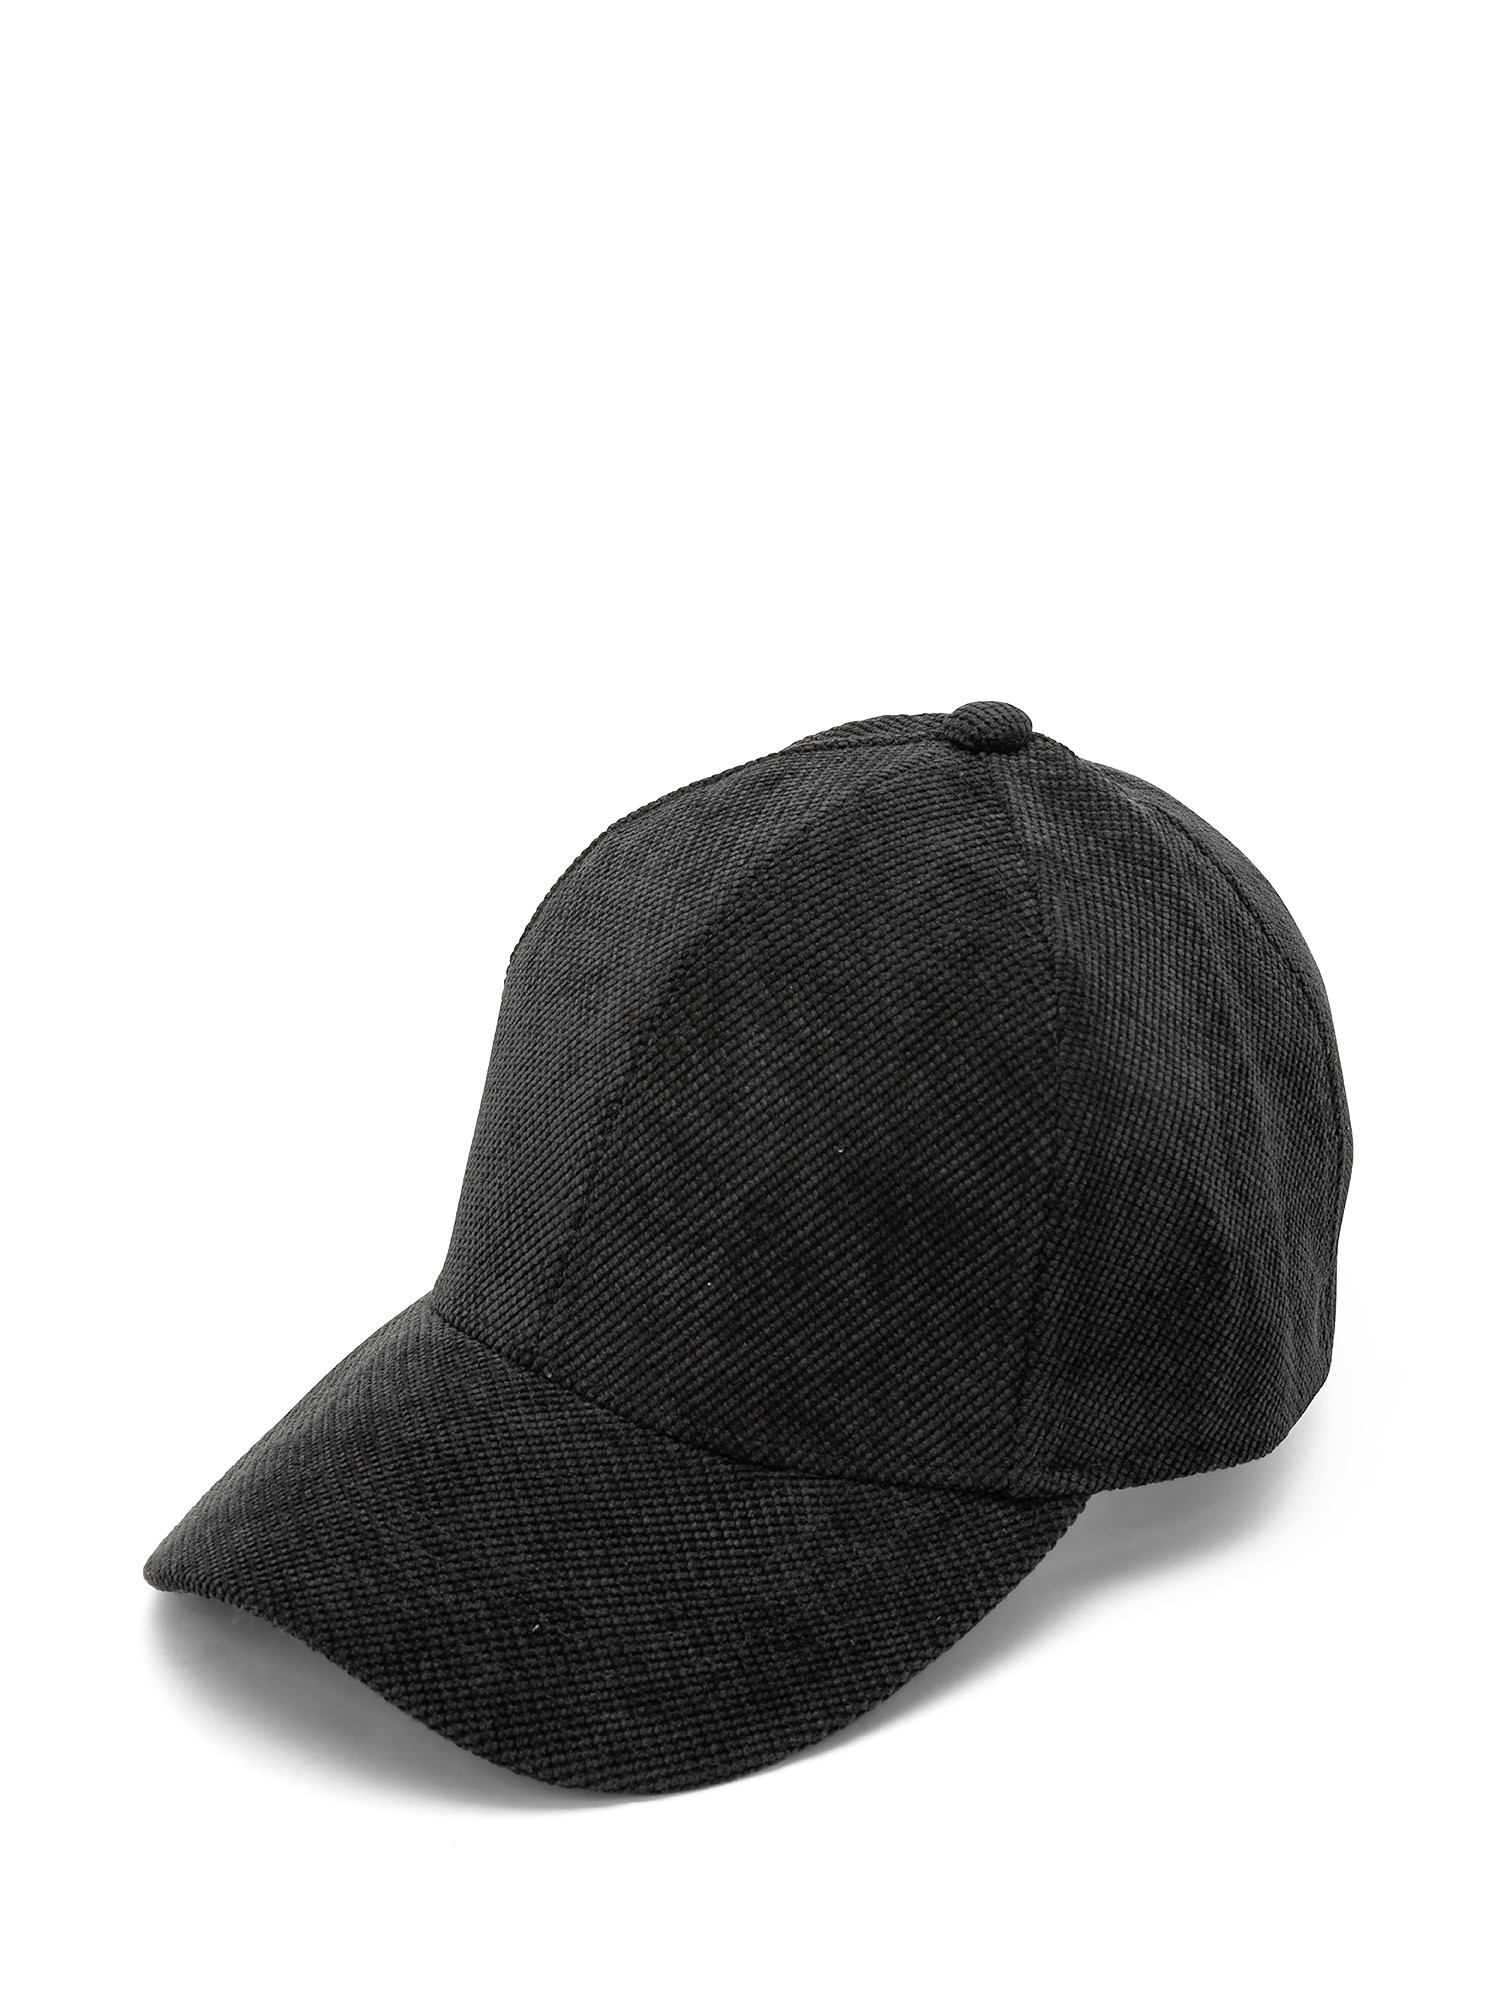 Baseball cap, Black, large image number 0